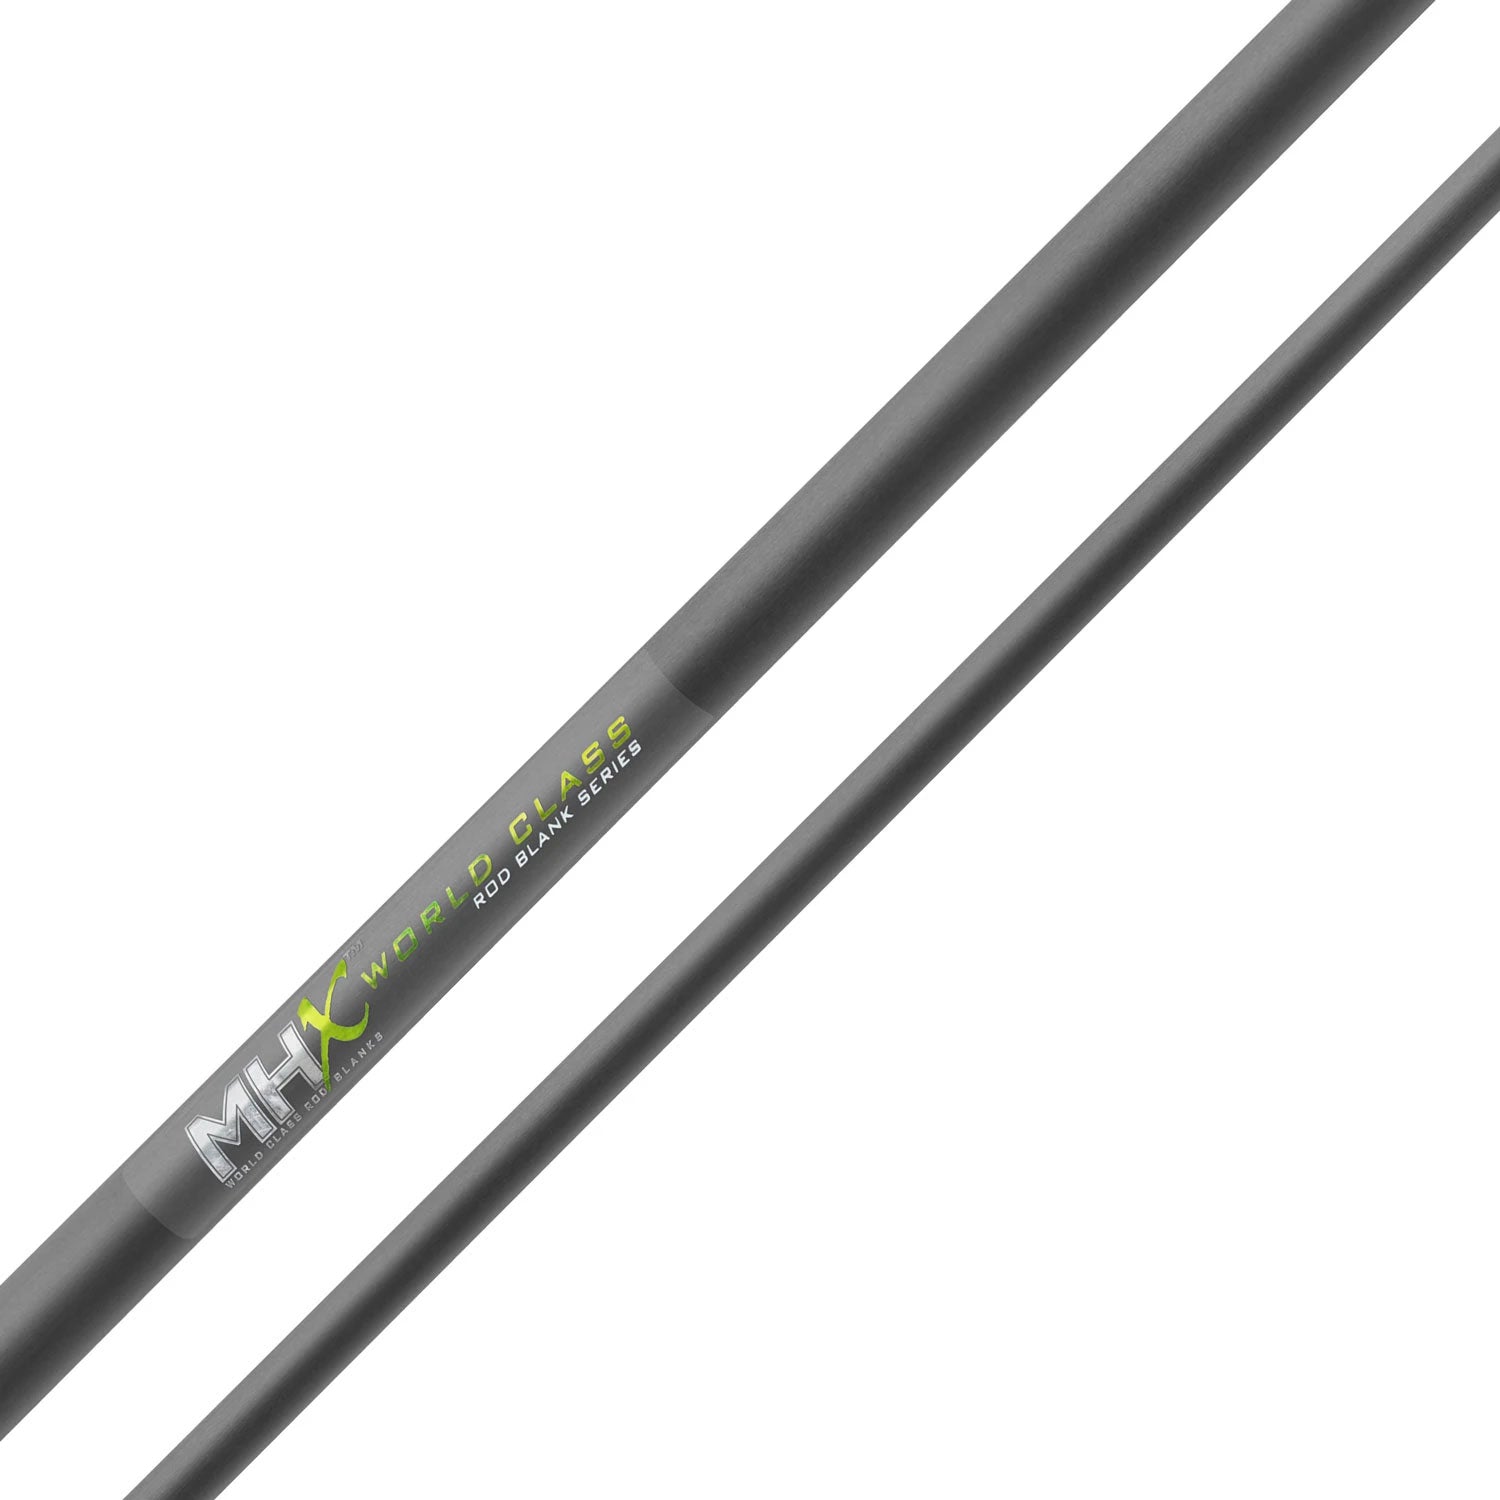 MHX 6'0" Ultralight Spinning Rod Blank - S721-2-MHX